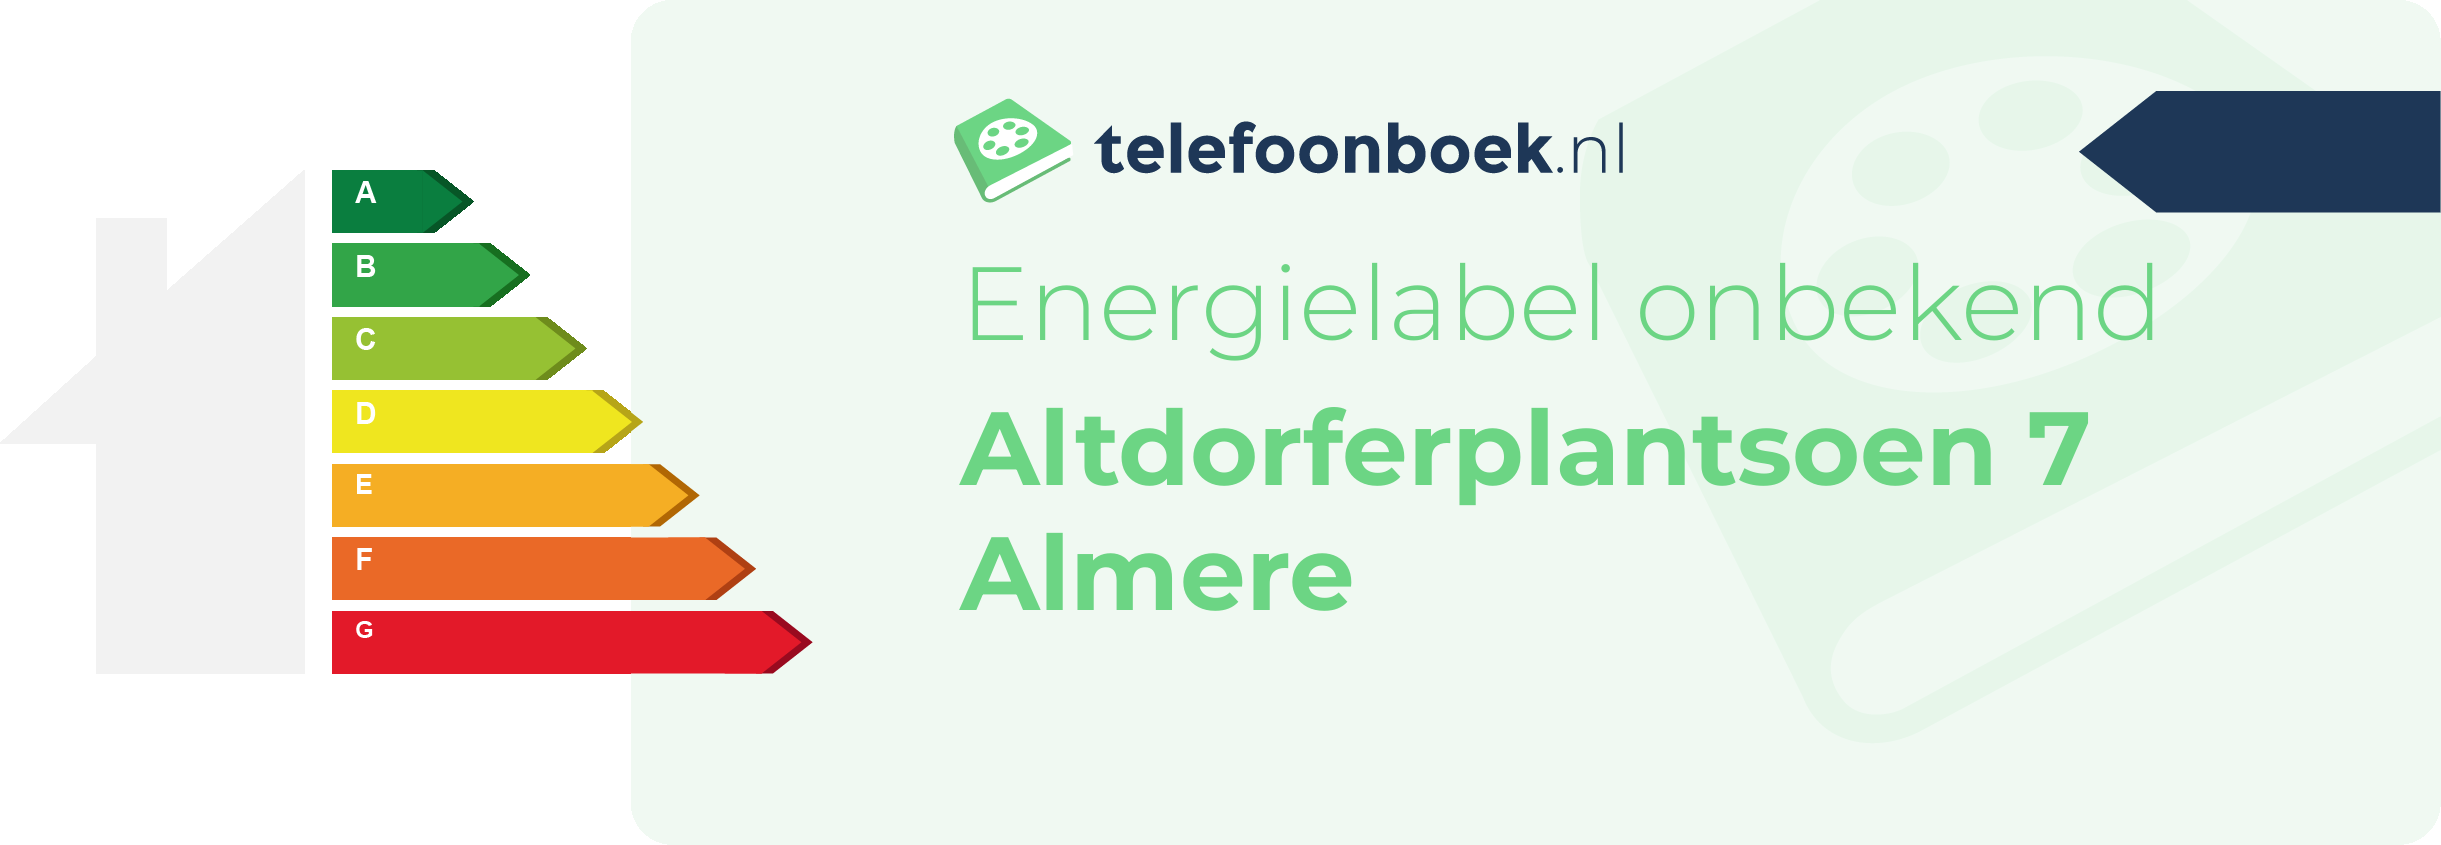 Energielabel Altdorferplantsoen 7 Almere